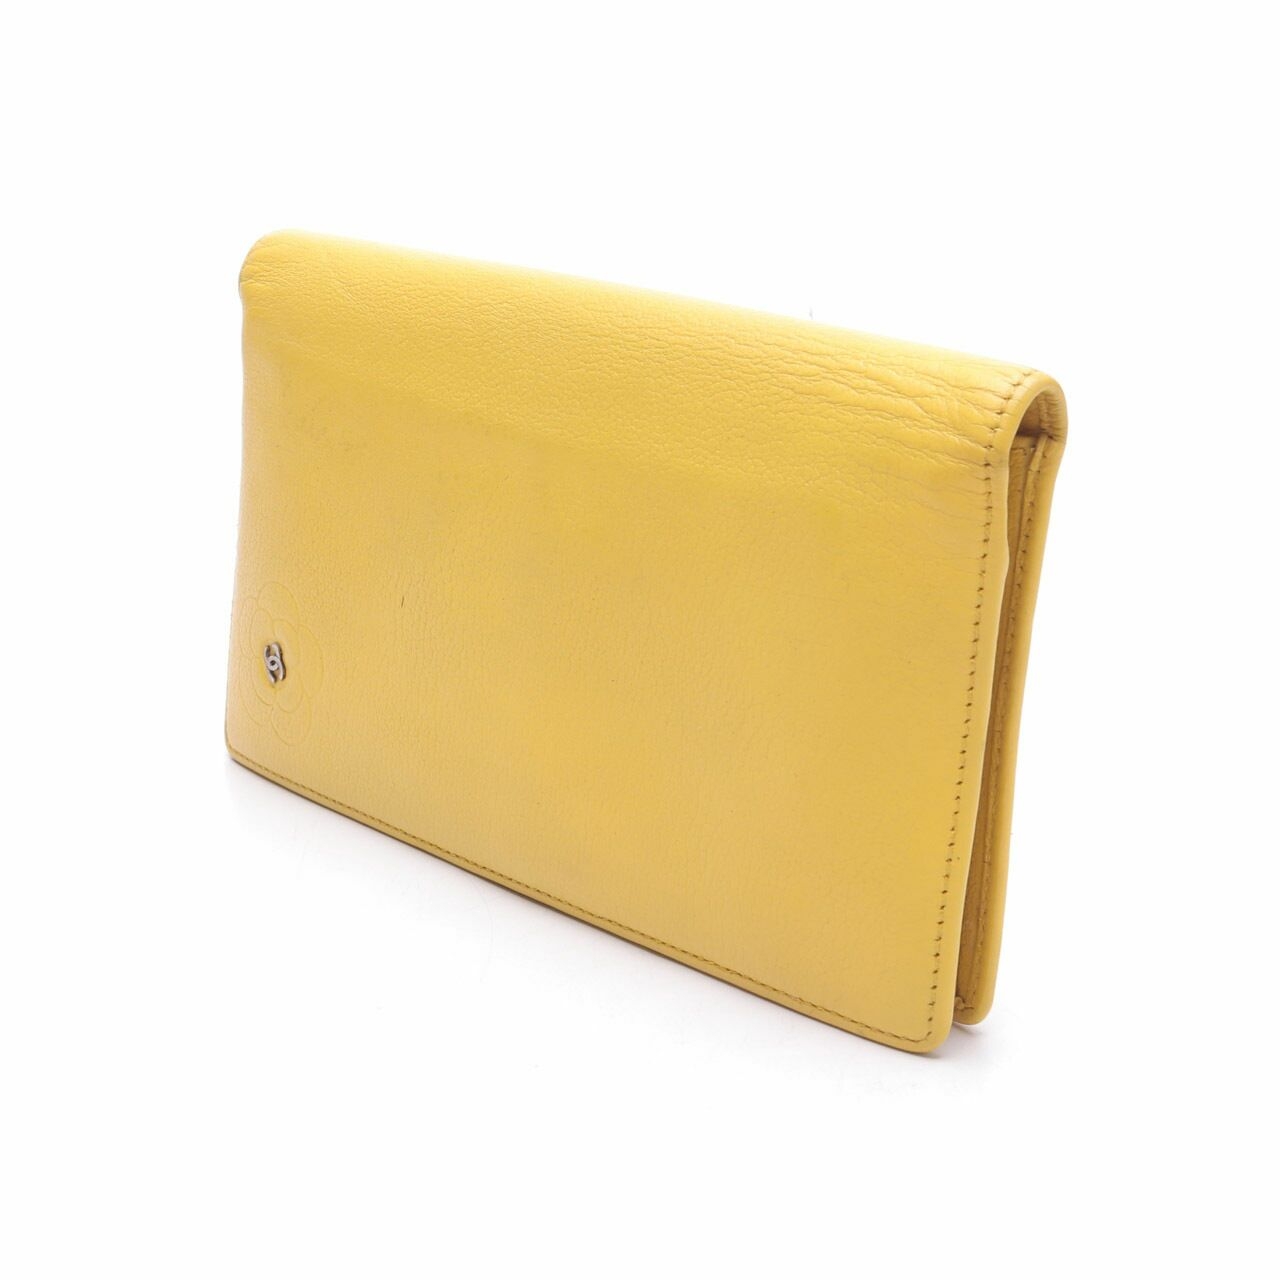 Chanel Leather Camellia Yen Yellow Wallet